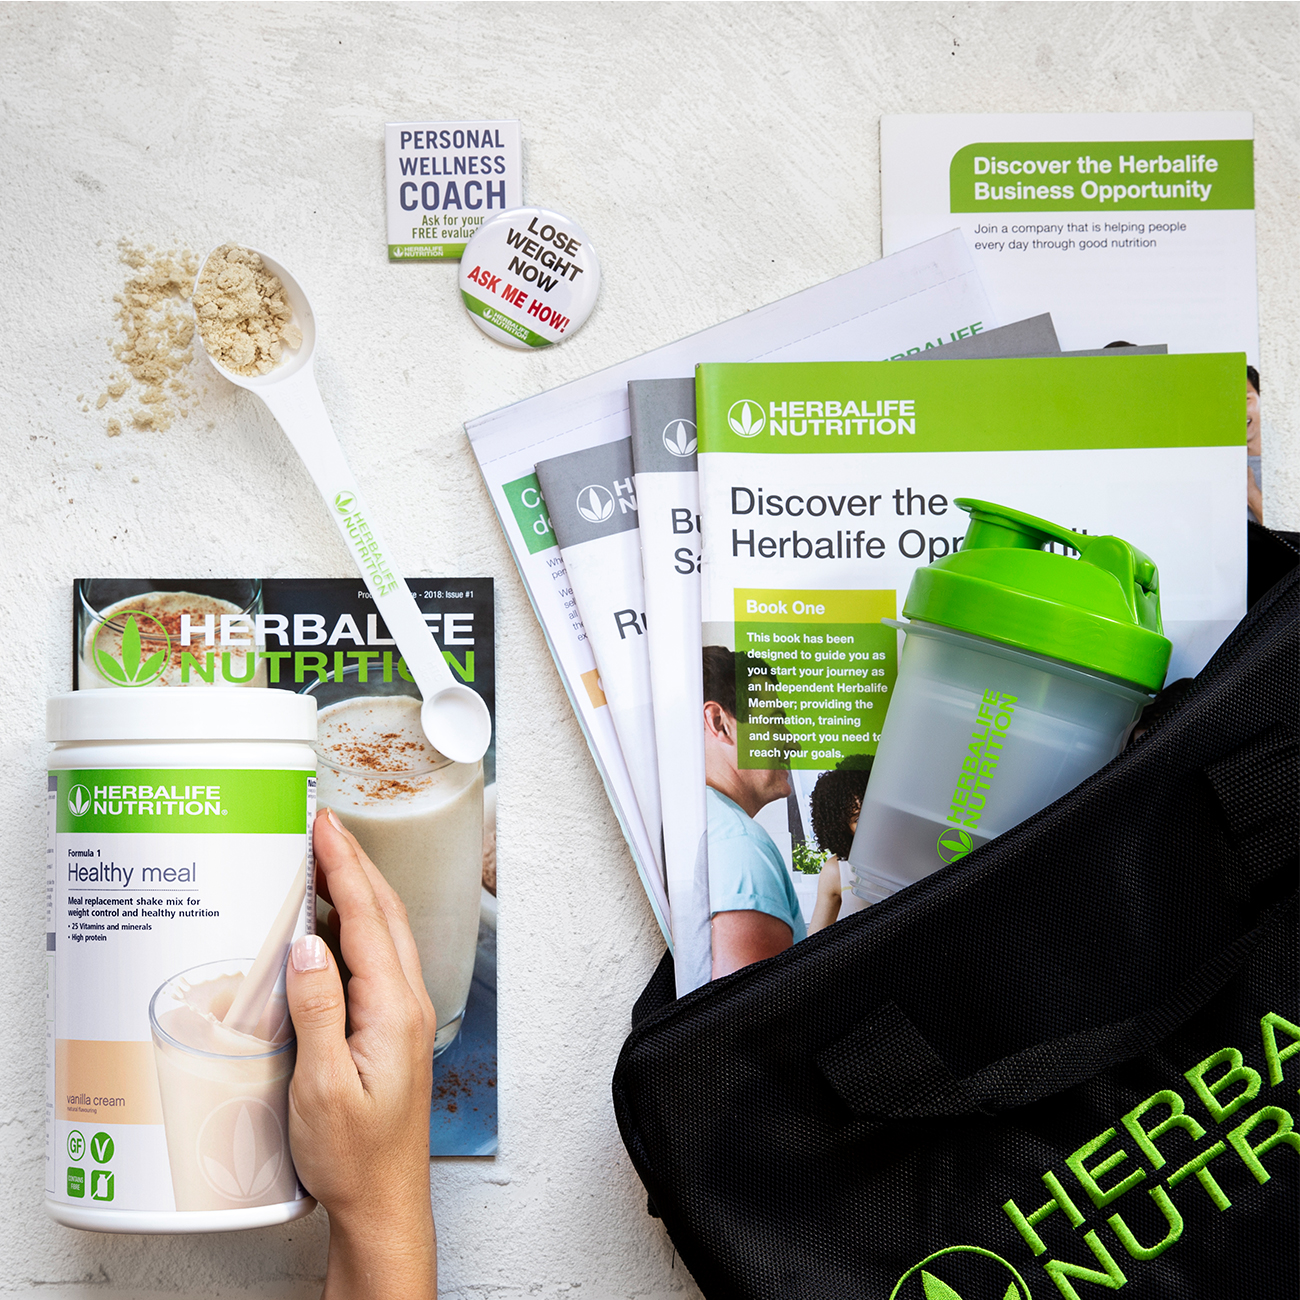 sadržaj herbalife nutrition početnog paketa.